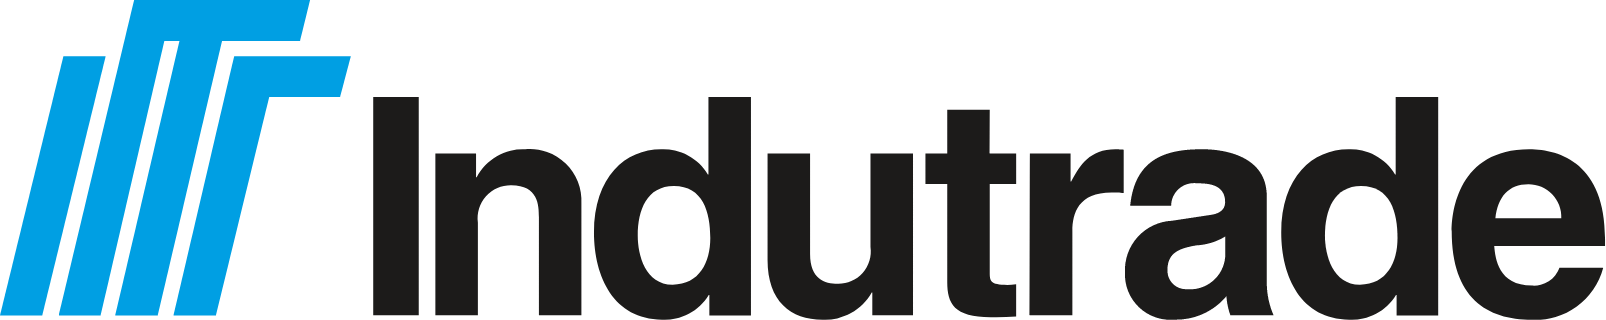 Indutrade logo large (transparent PNG)